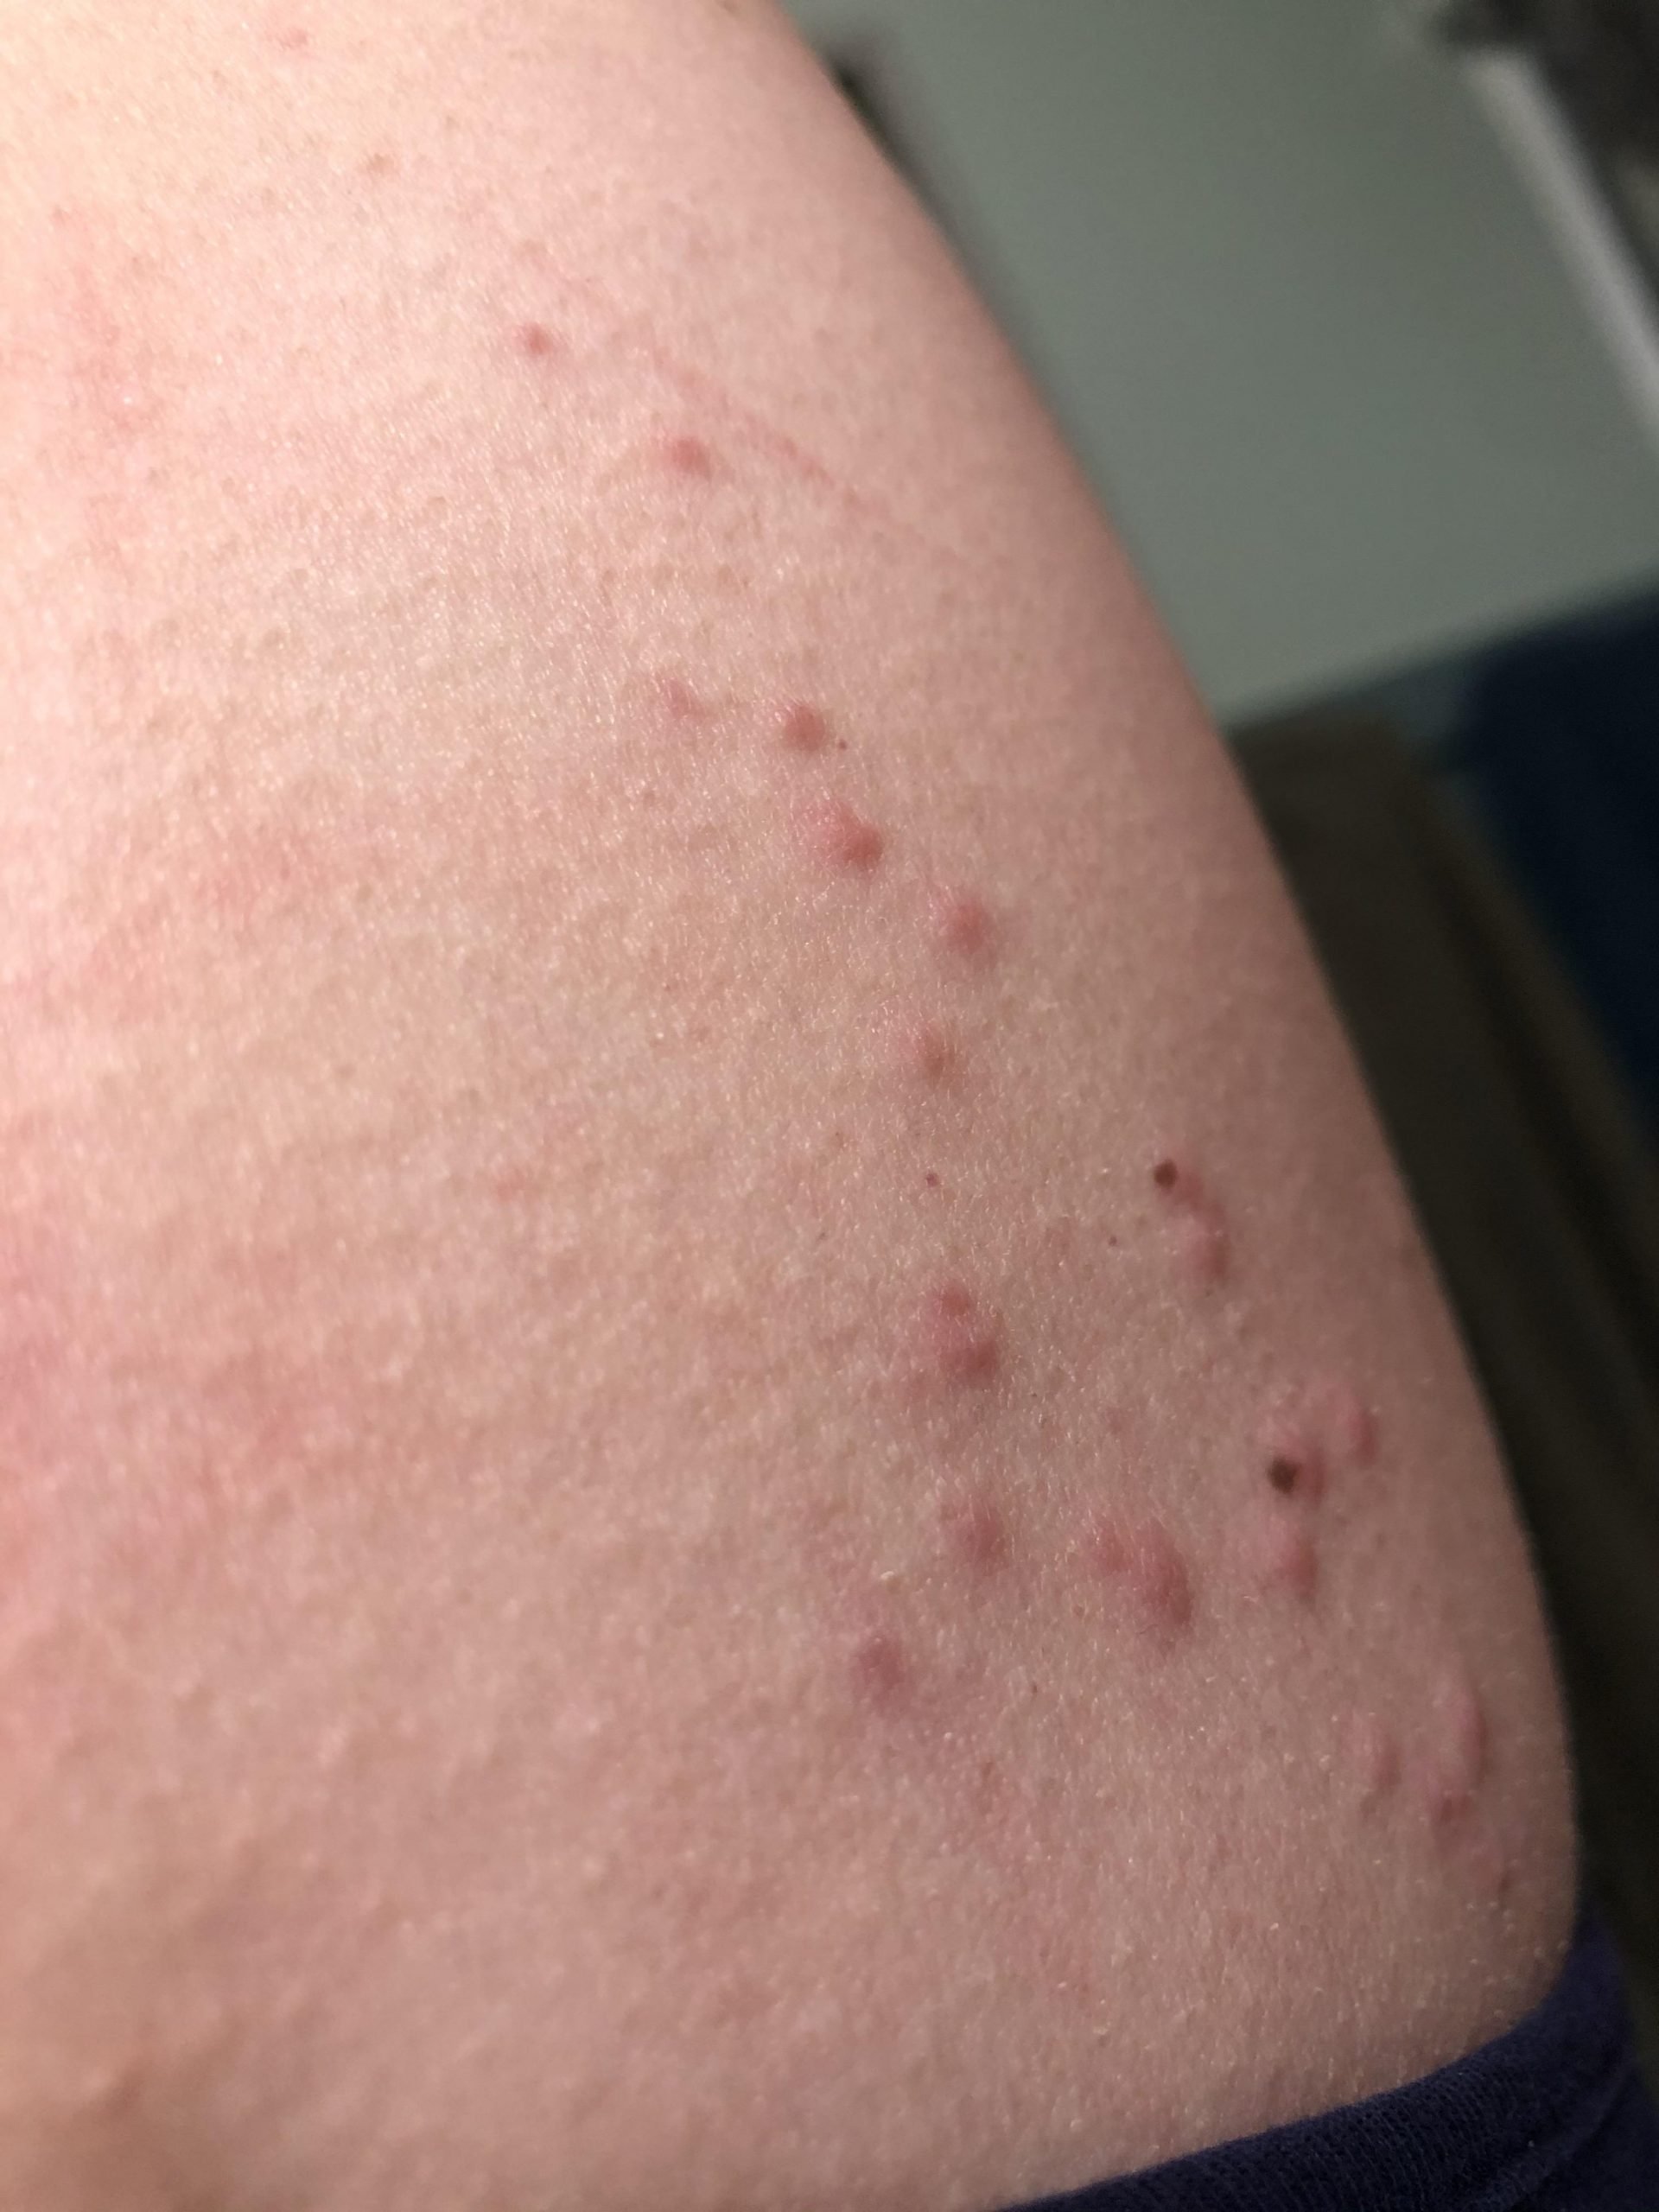 Shingles or bites? : Dermatology